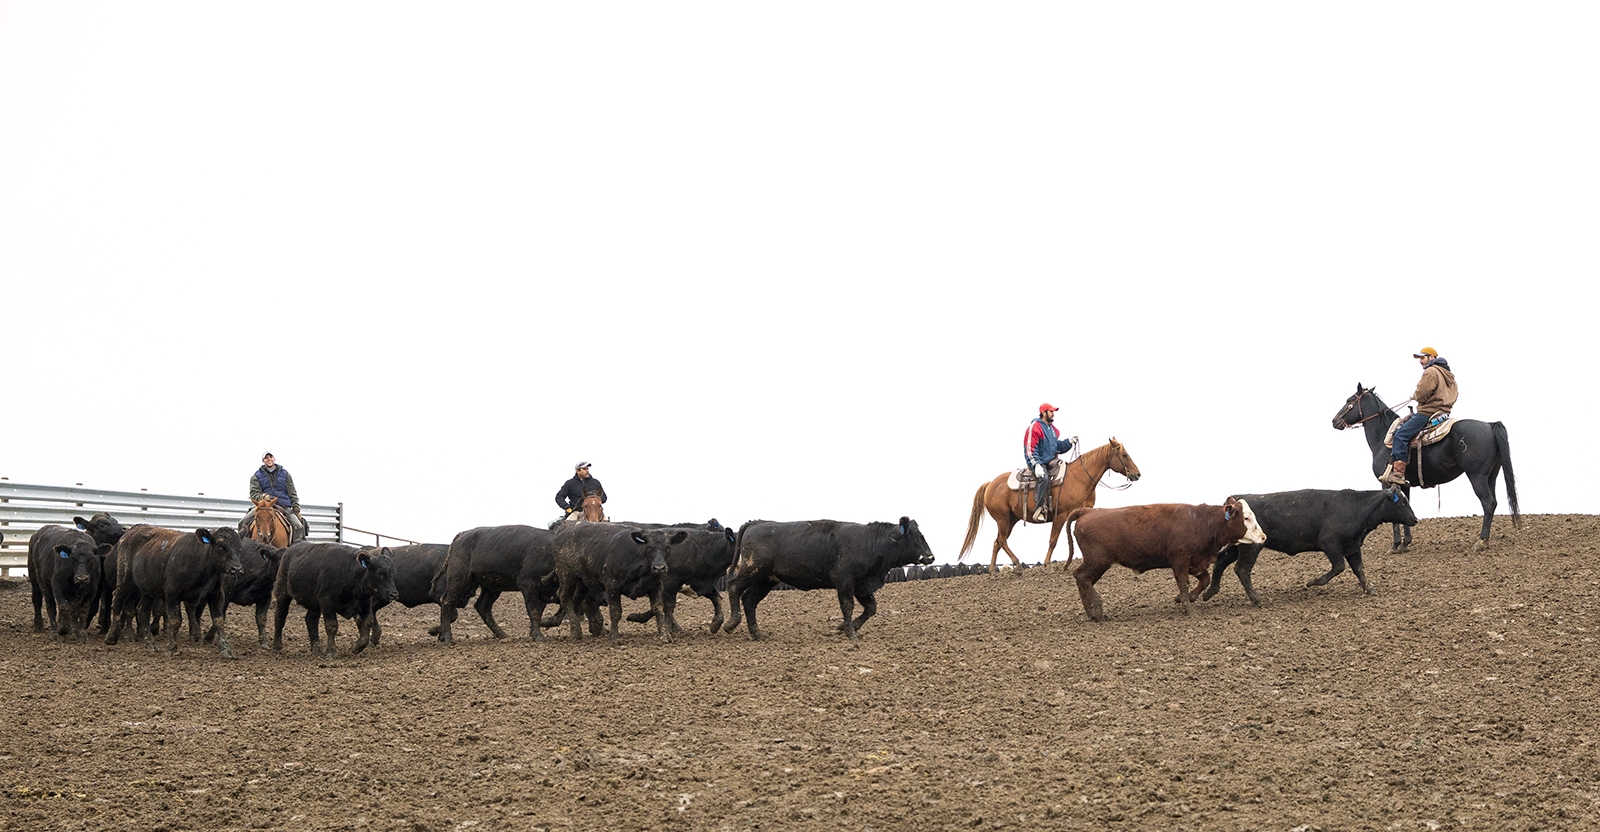 Cowboys control cows in a fields in South Dakota.